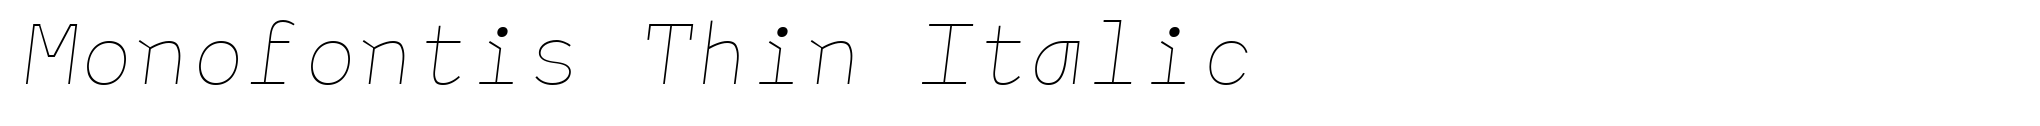 Monofontis Thin Italic image